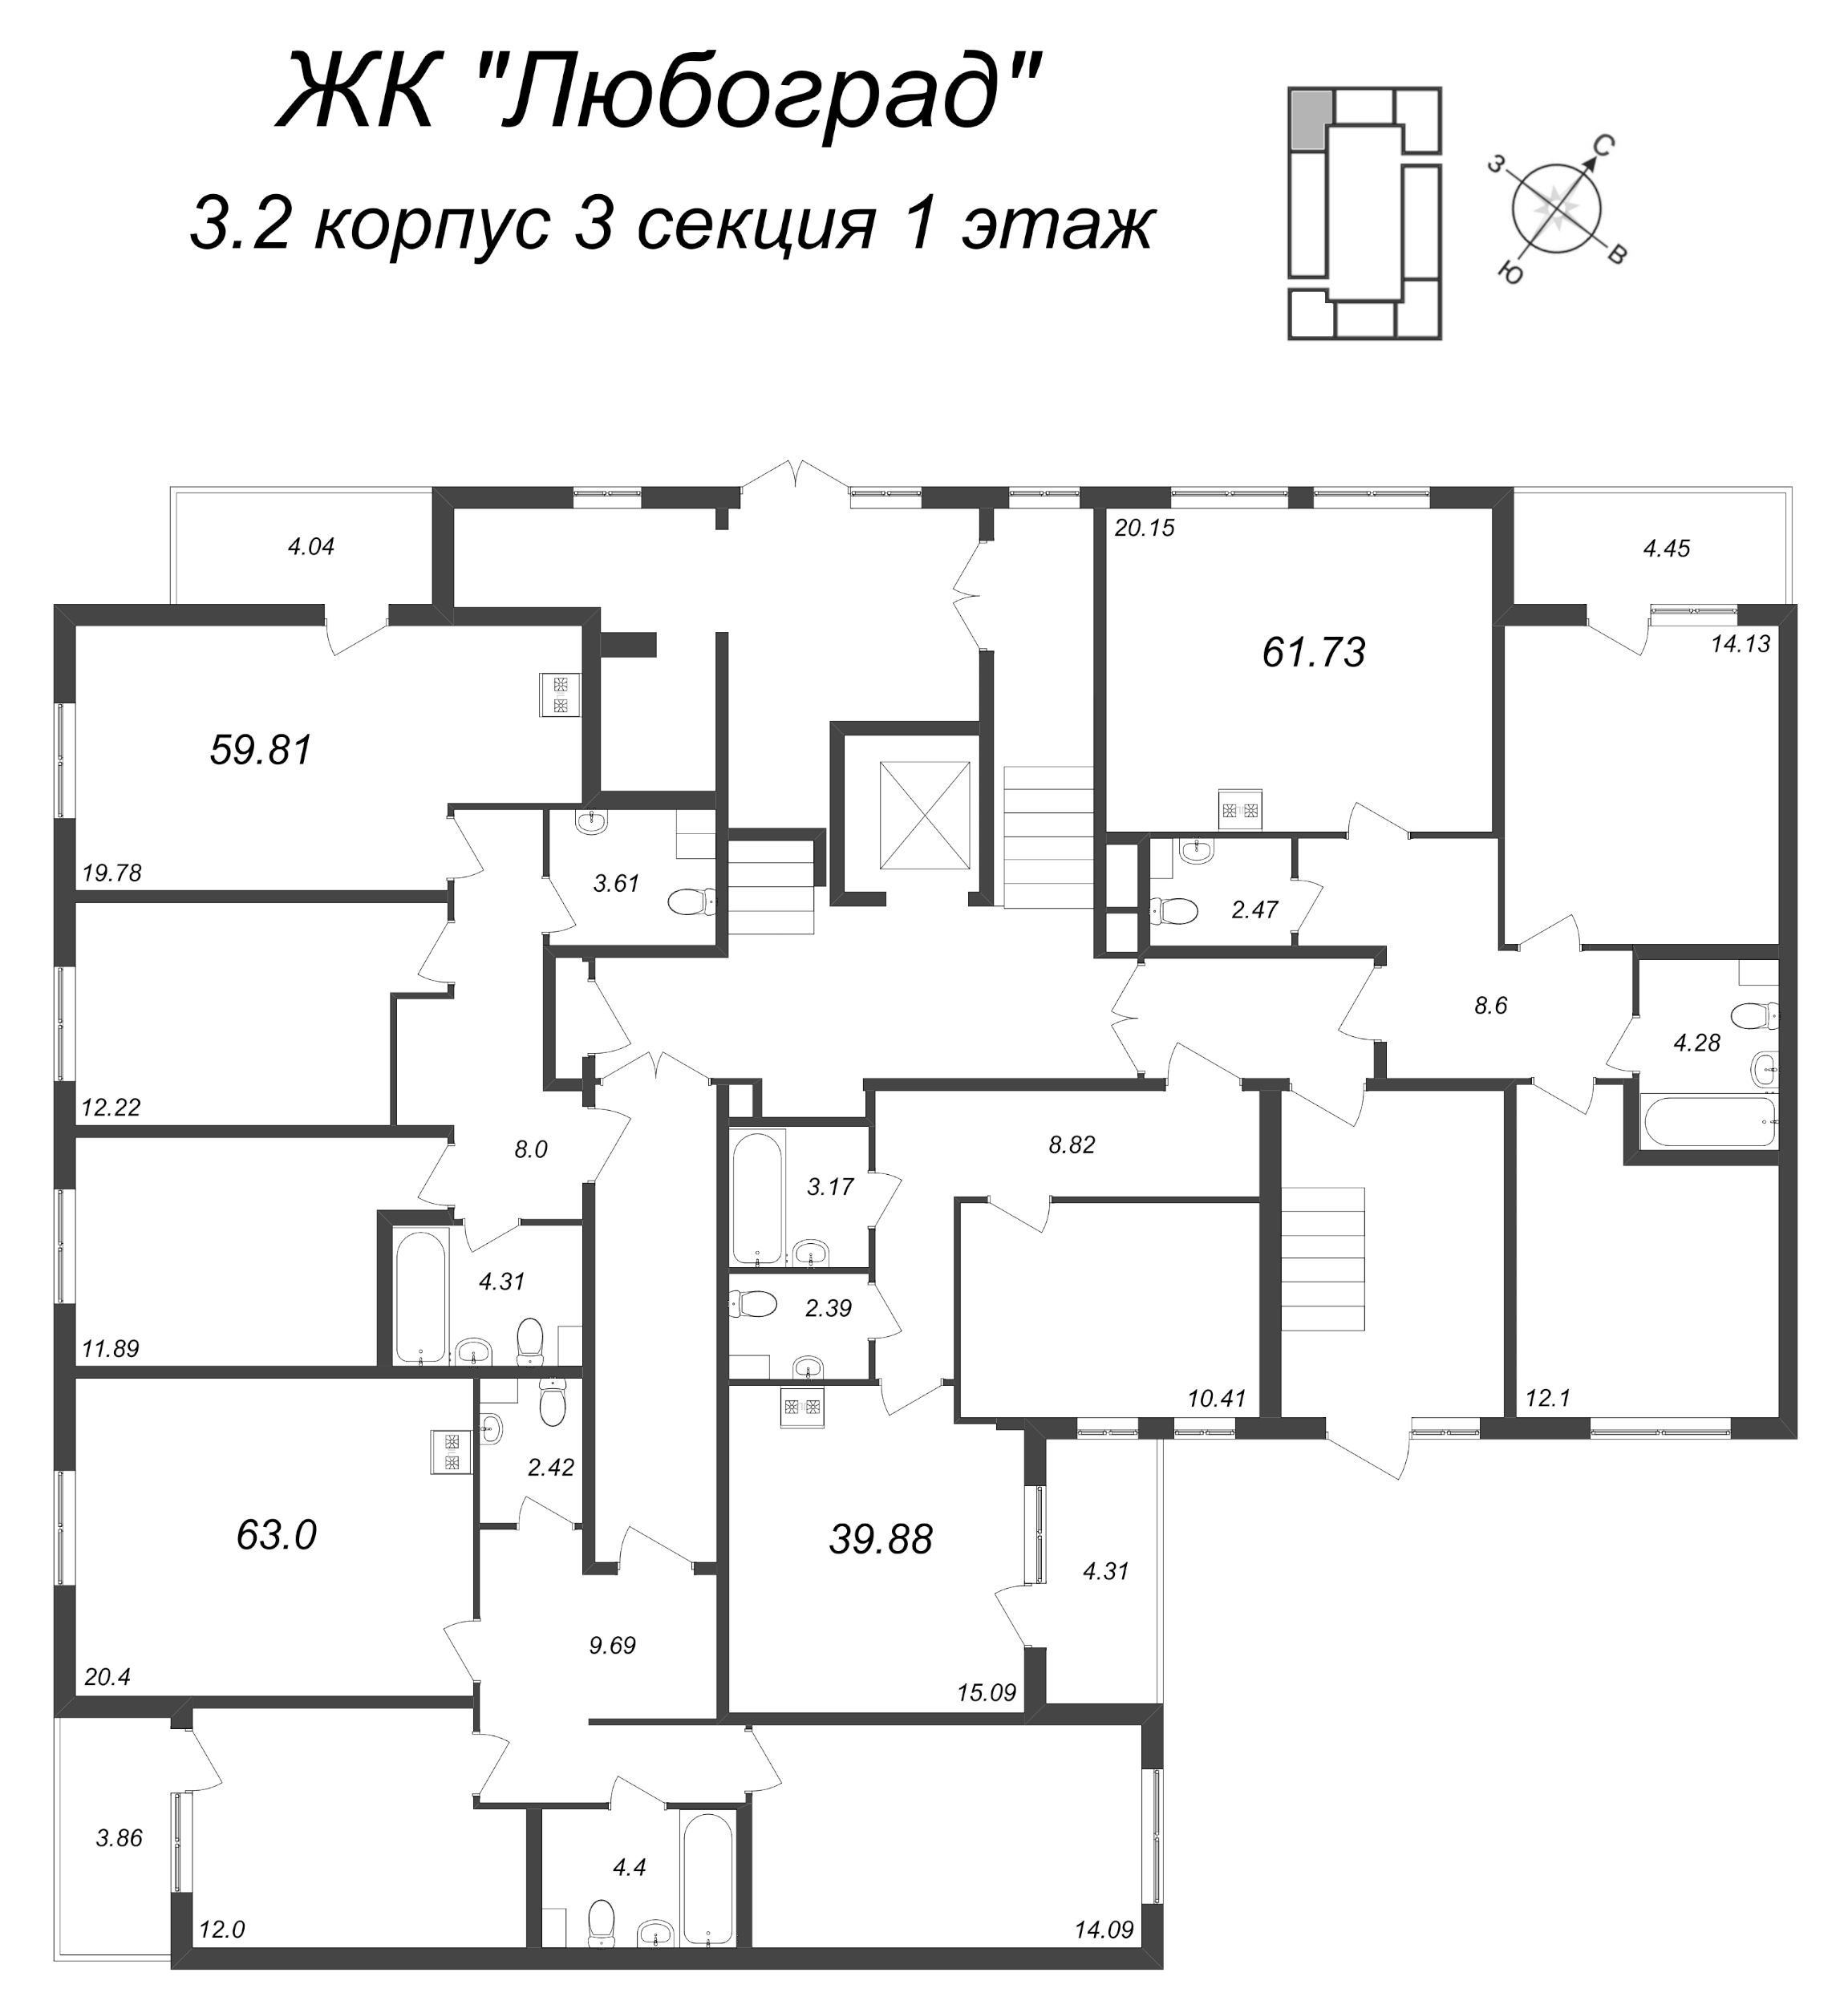 3-комнатная (Евро) квартира, 61.73 м² - планировка этажа